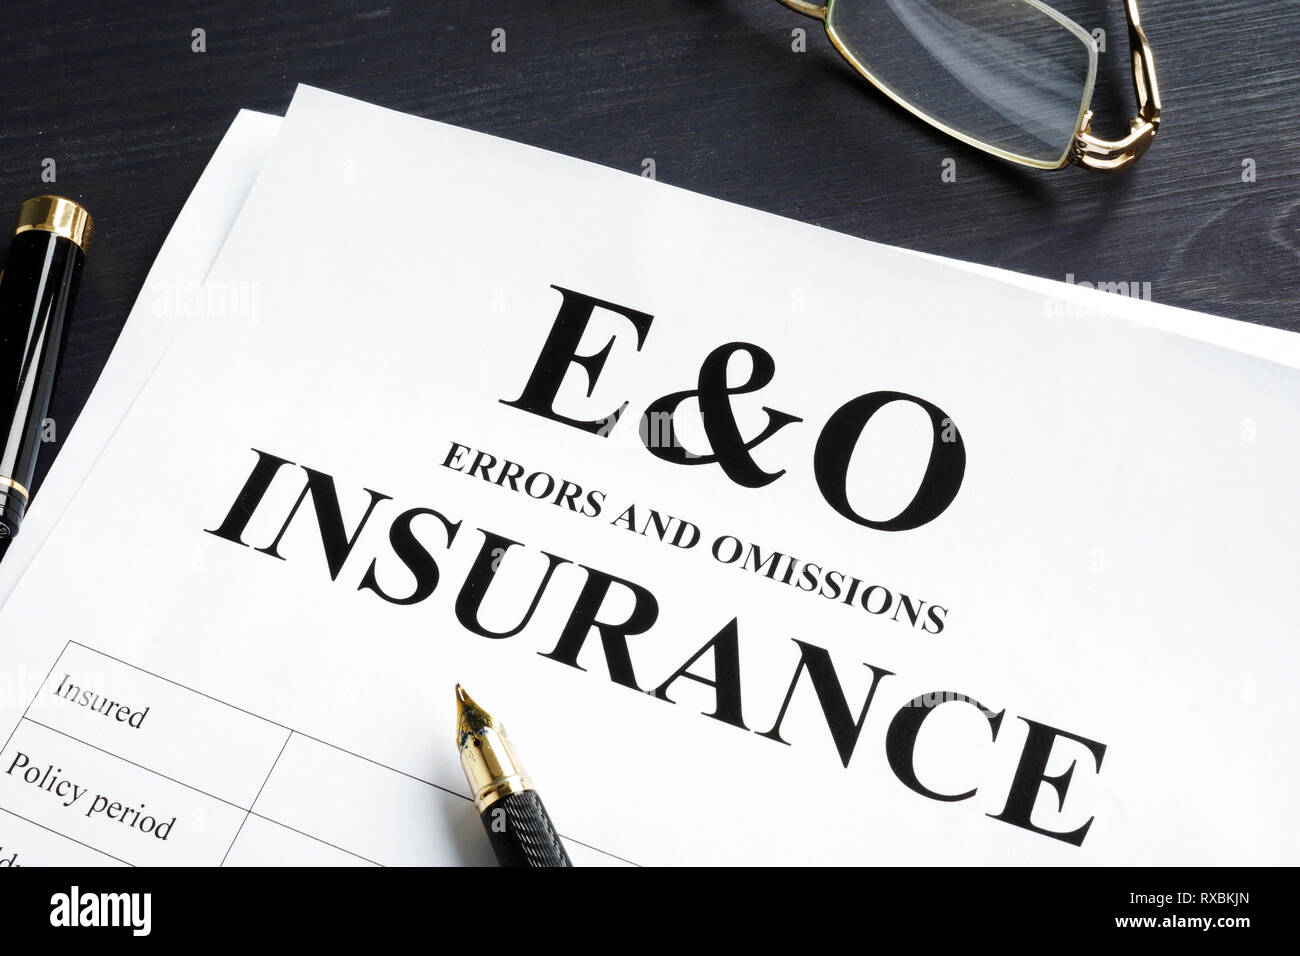 Errors and omissions insurance E&O form. Professional liability. Stock Photo